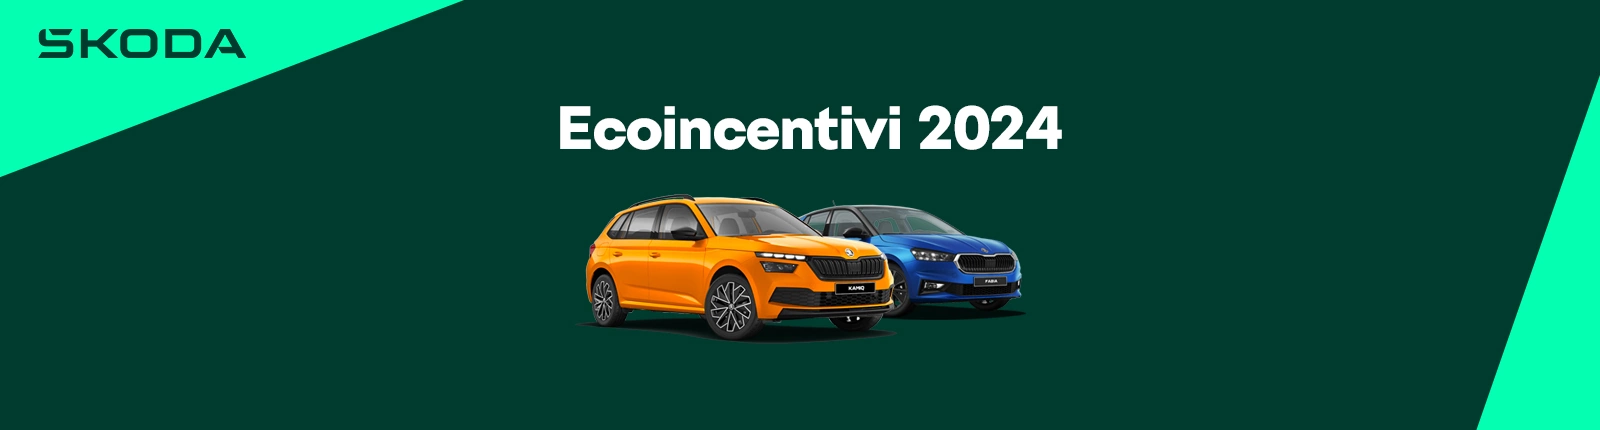 Škoda Firenze | Ecoincentivi Auto 2024